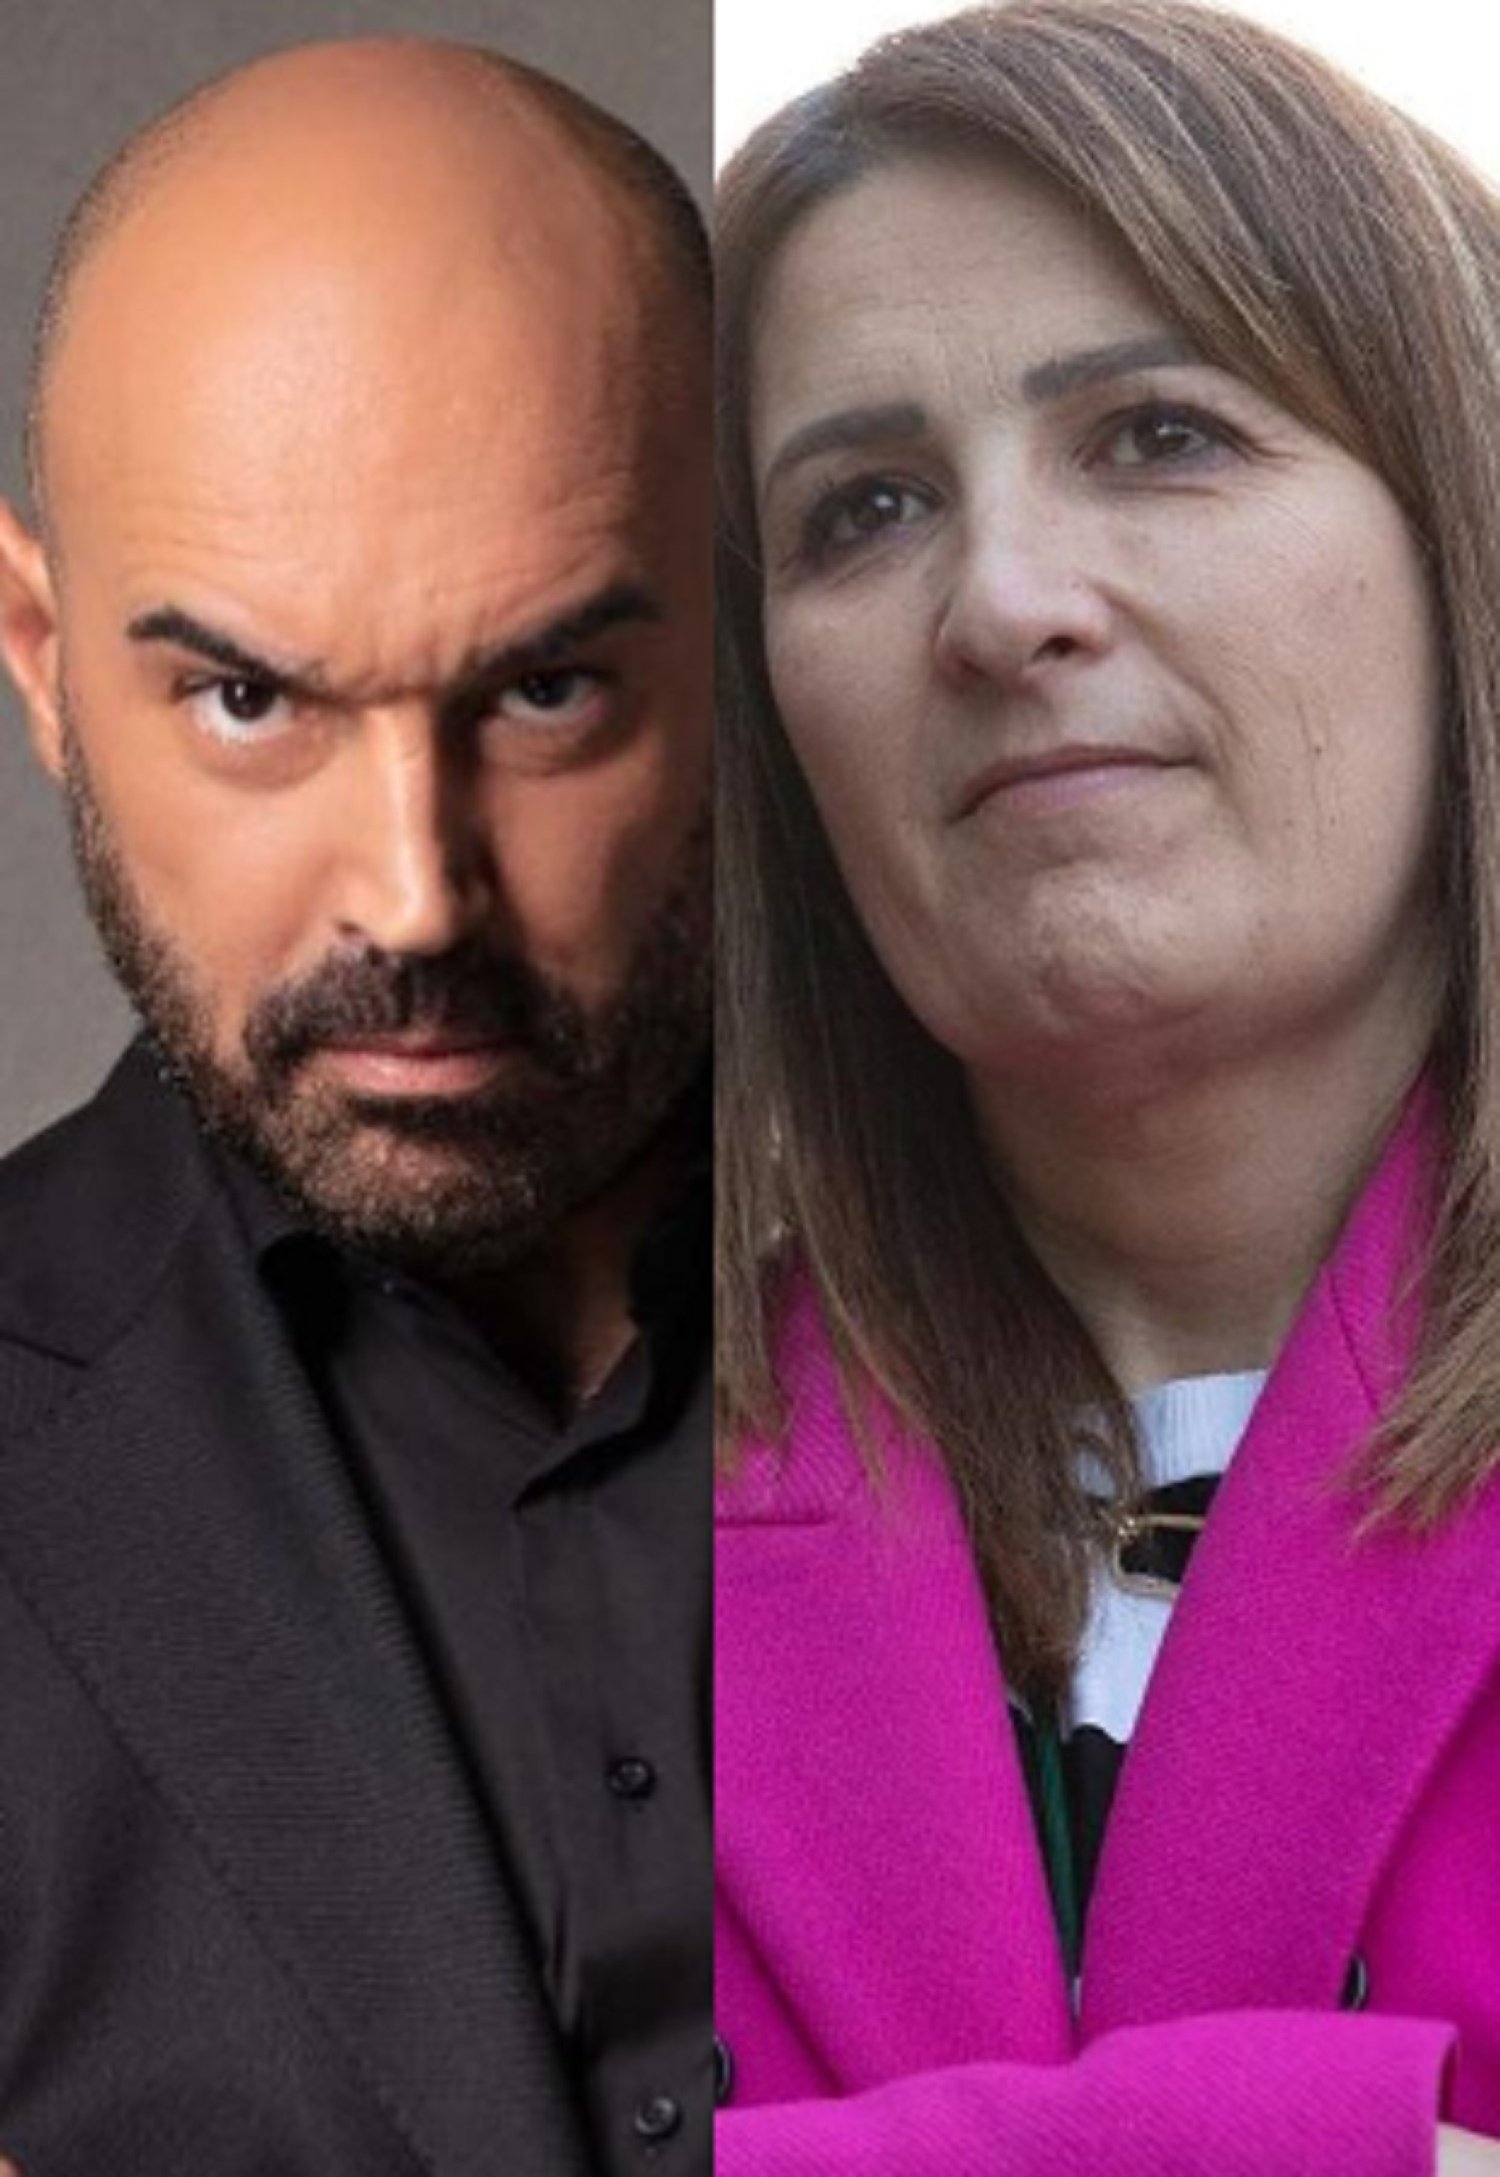 Imagen vomitiva en TV, Llucià Ferrer y Laura Fa estallan: "¿¿Podemos acabar con esta mier**??"